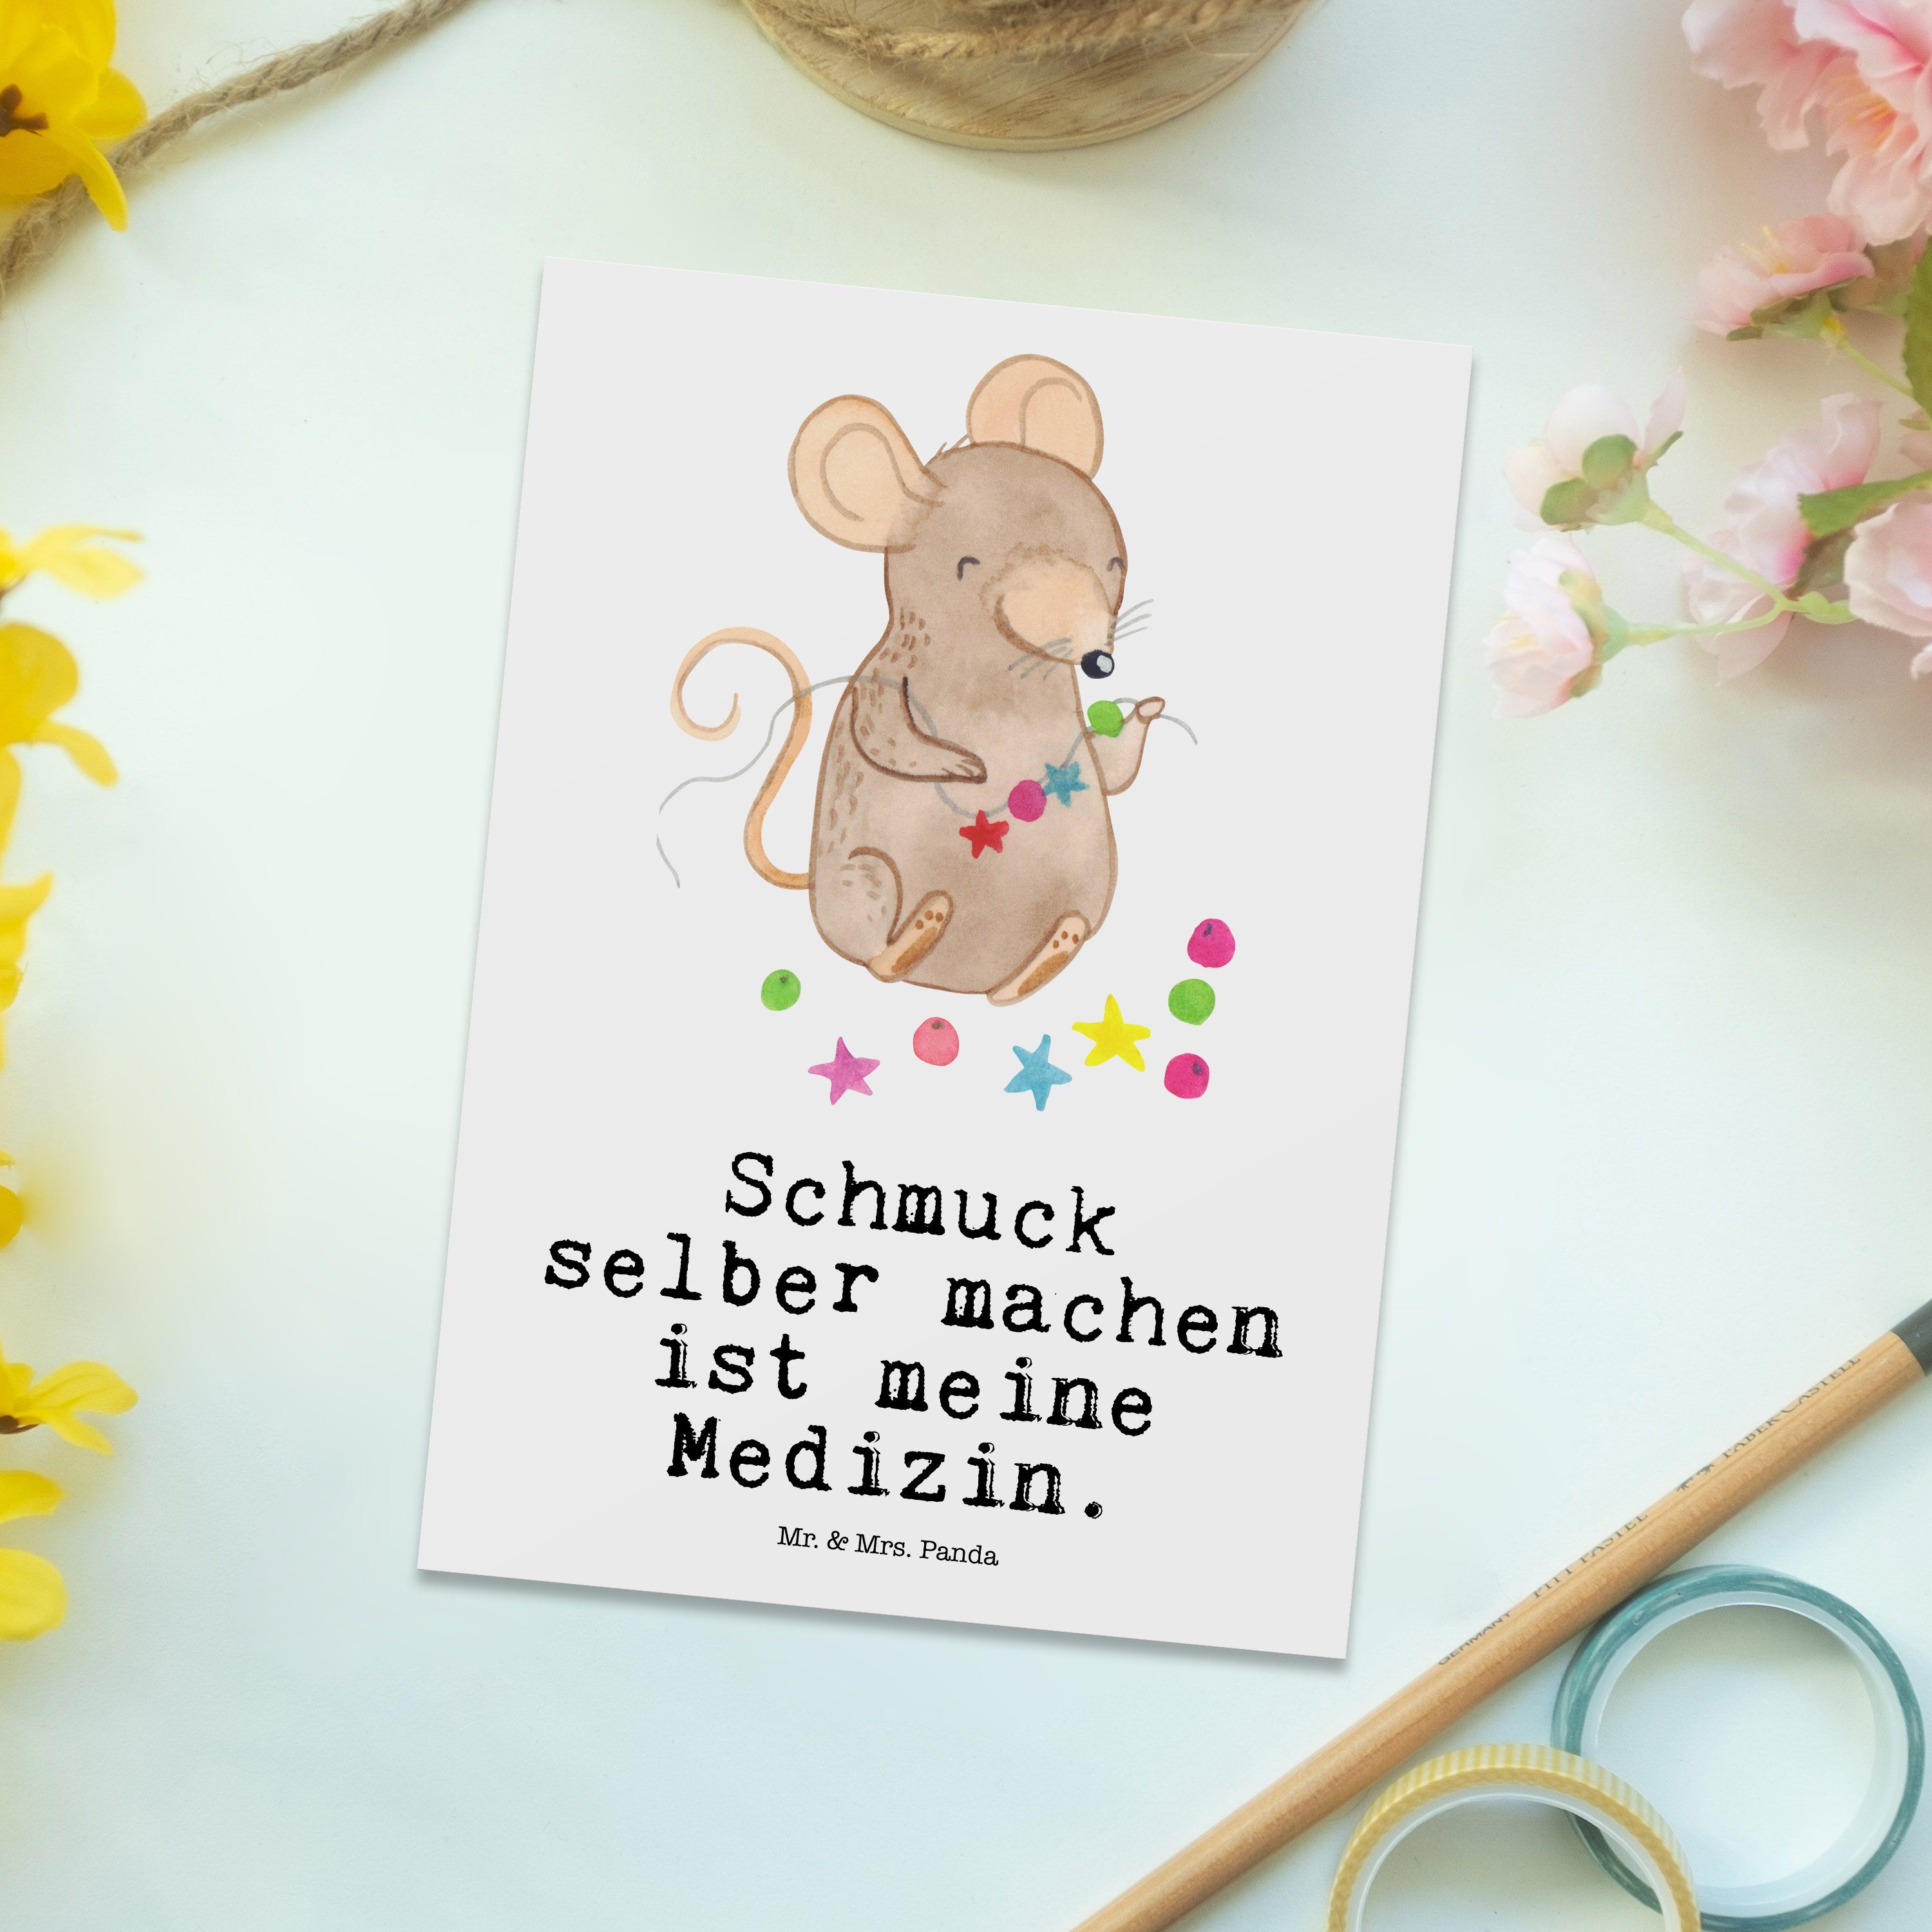 & Medizin Mrs. Panda machen Geschenk, - Mr. Maus Schmuck Danke, - selber Schmuck Weiß Postkarte